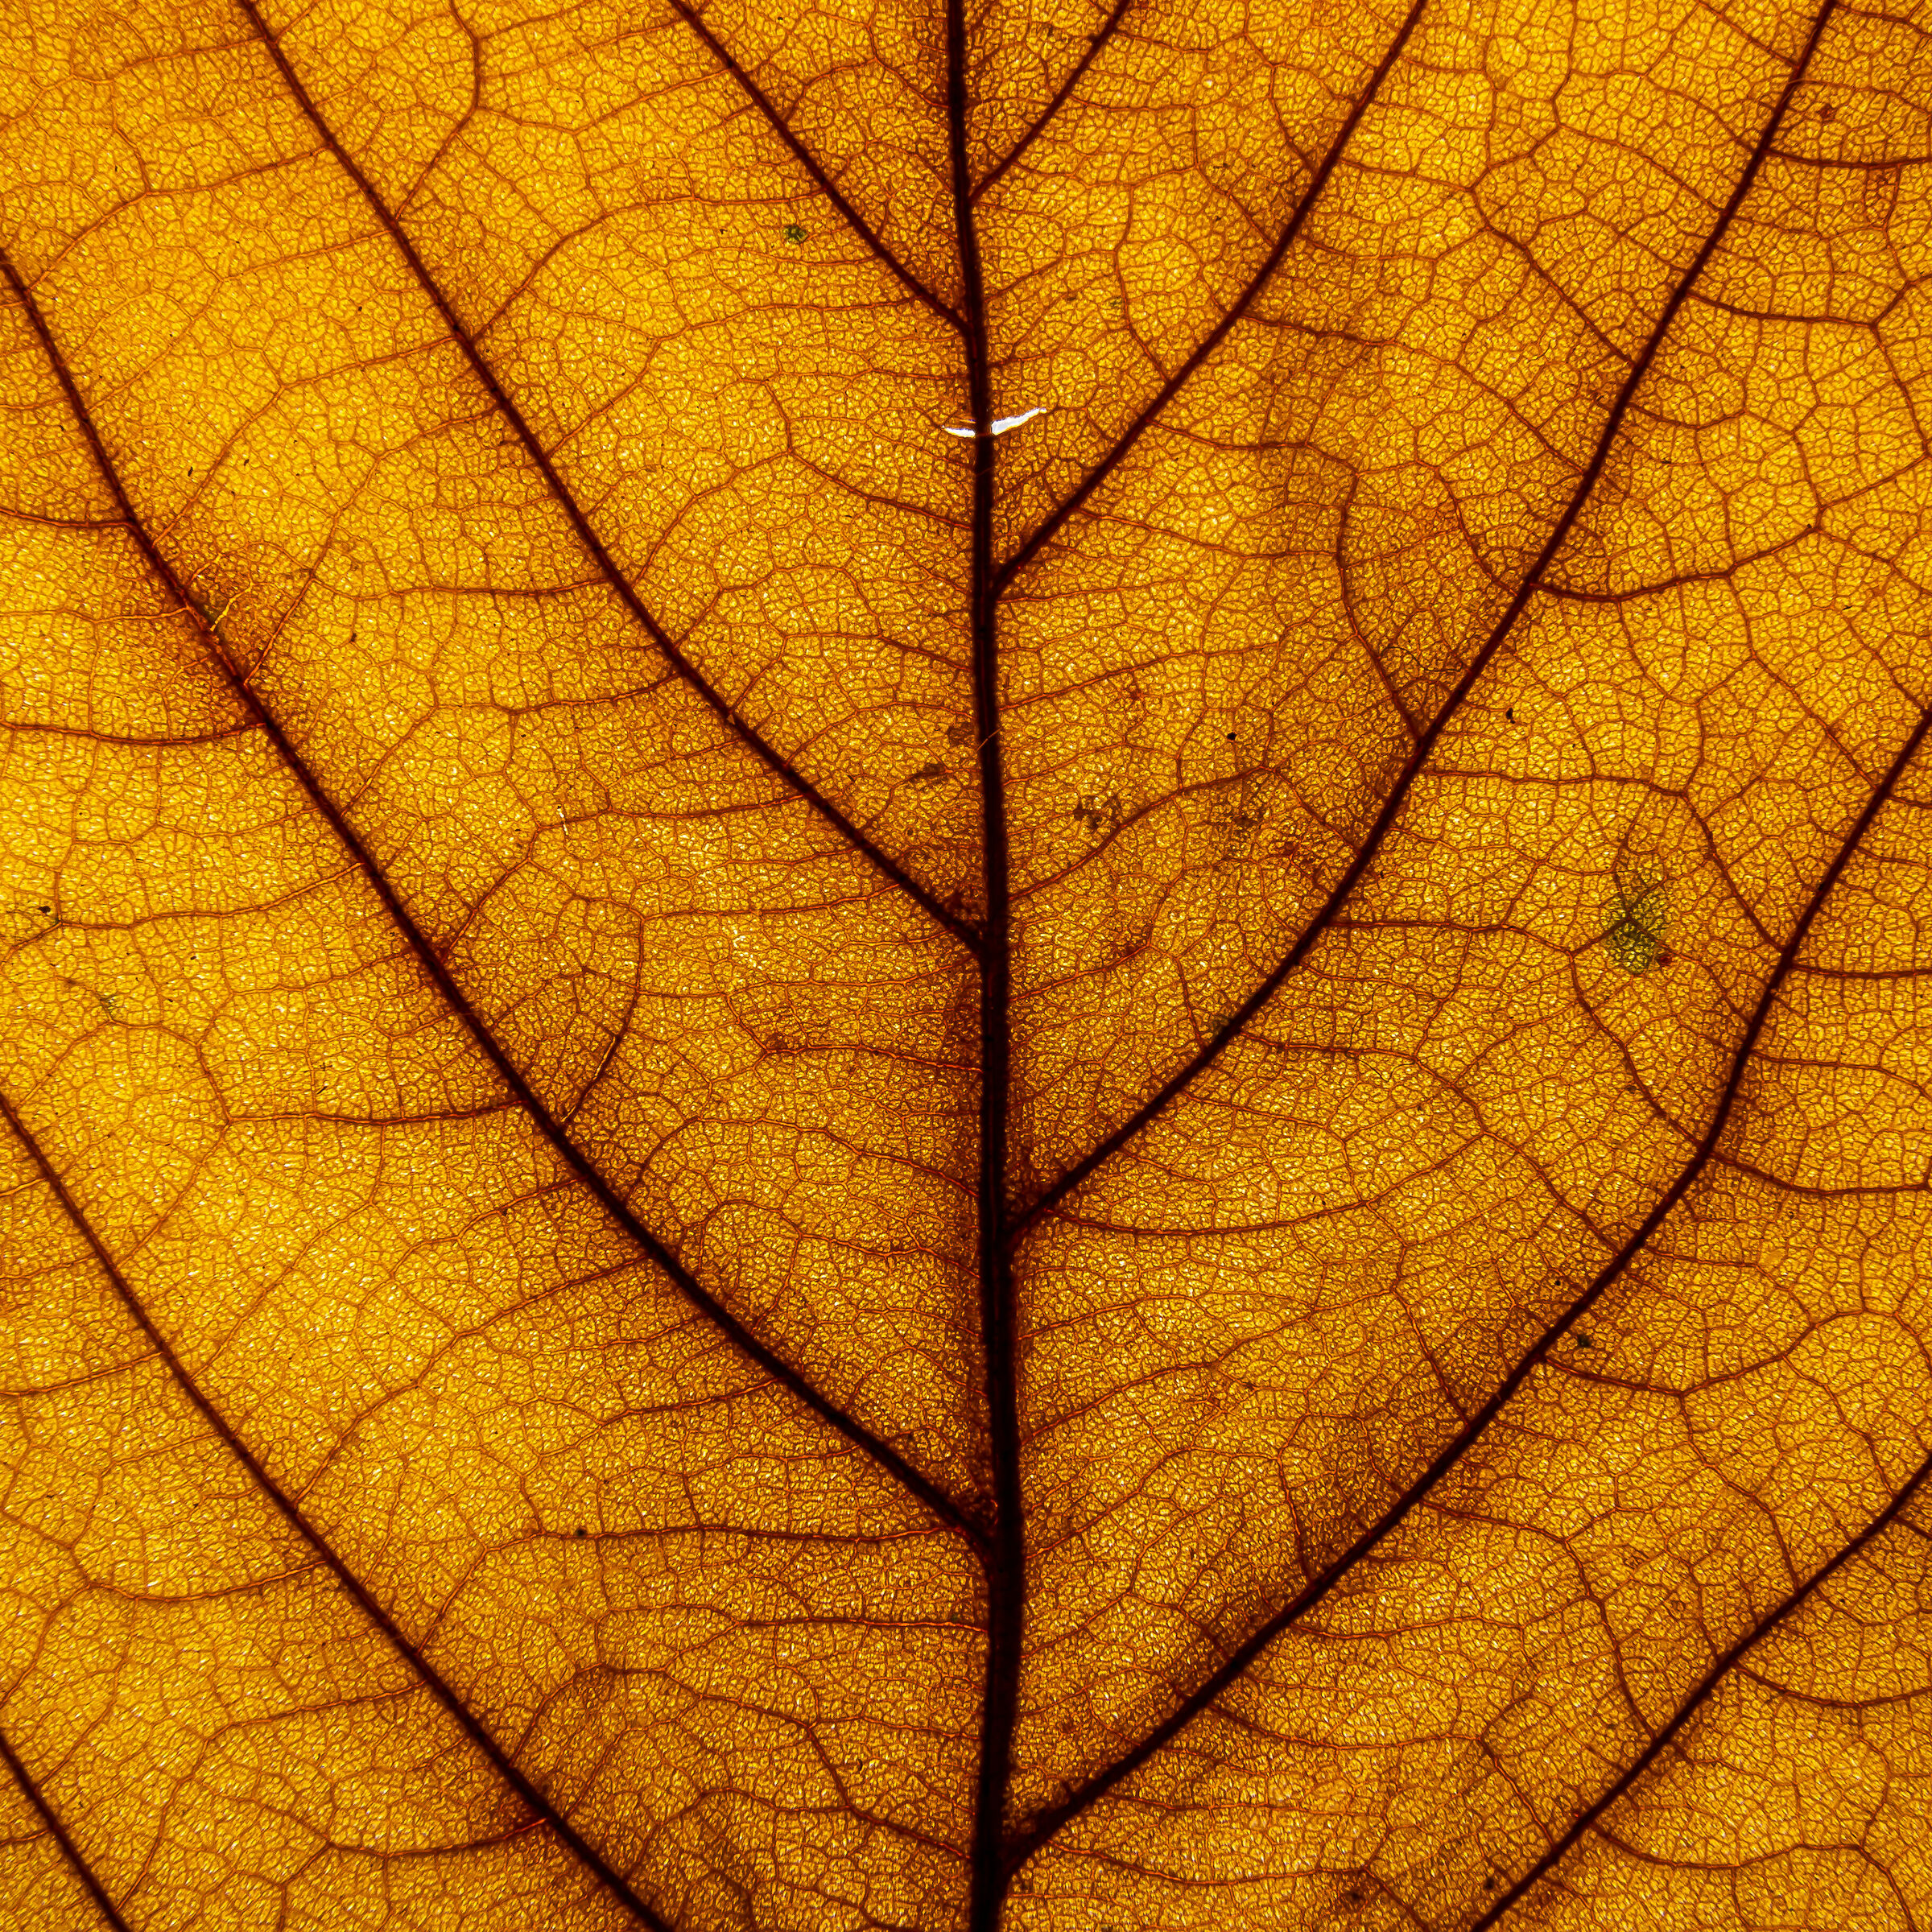 Autumn under a microscope...